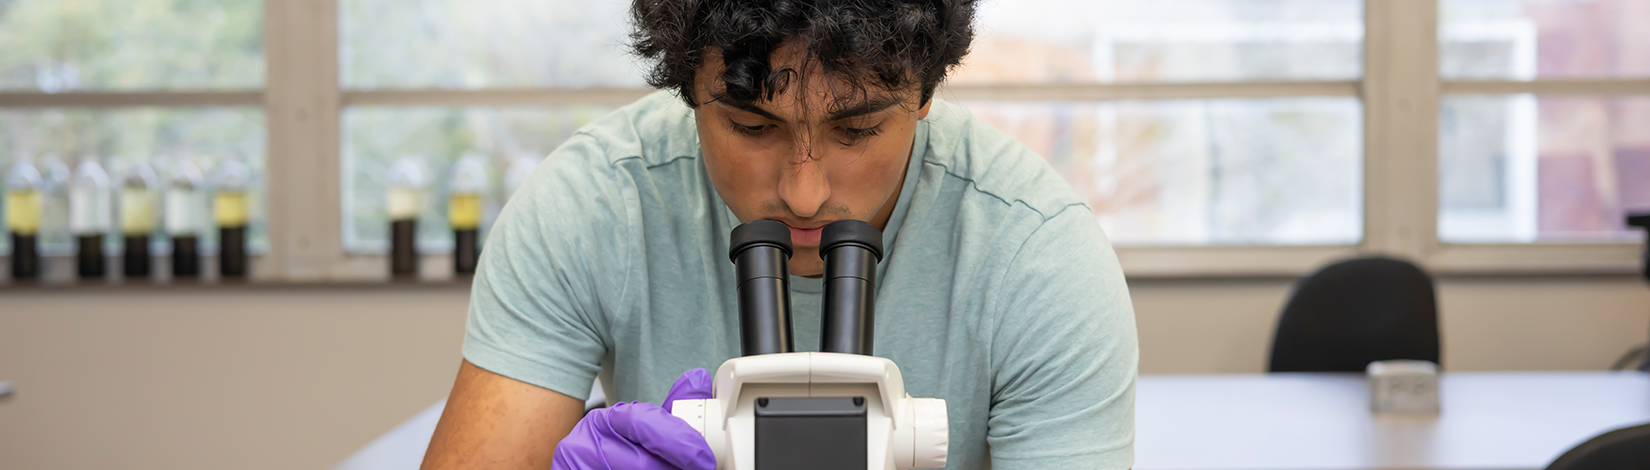 Student looks through microscope while adjusting knob.